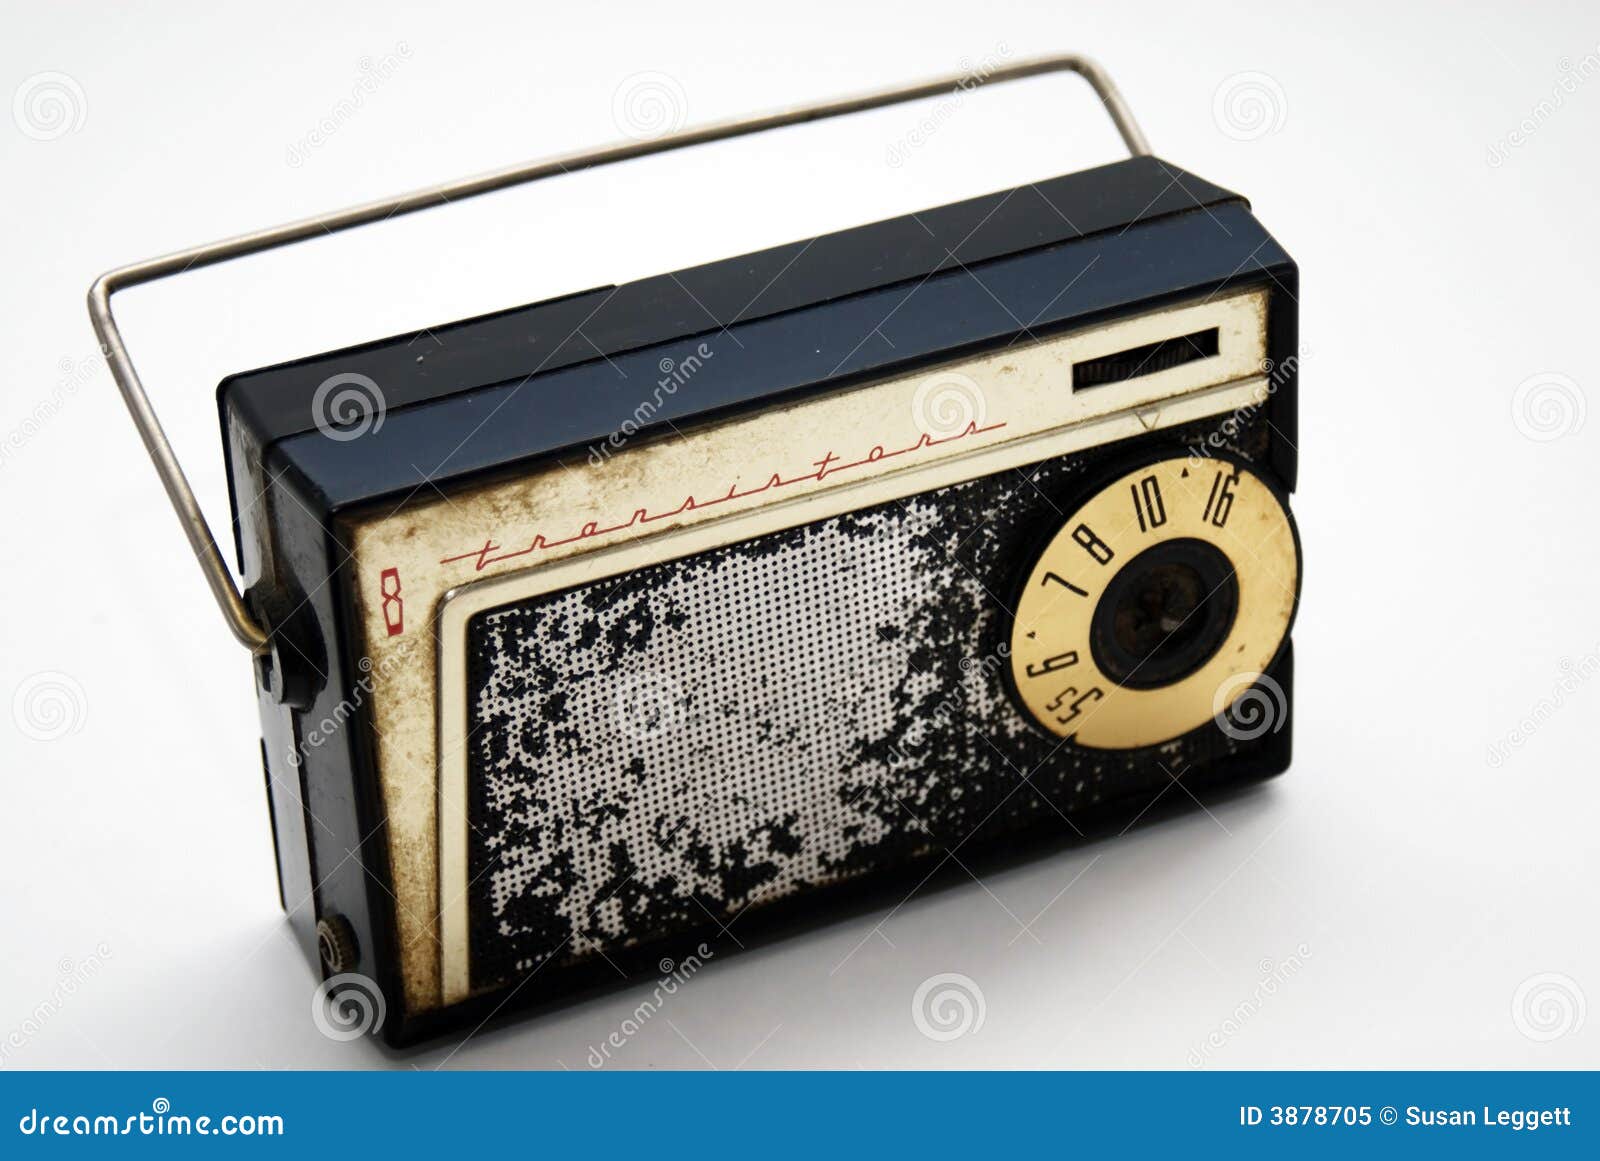 4,110 Transistor Radio Stock Photos - Free & Royalty-Free Stock Photos from  Dreamstime